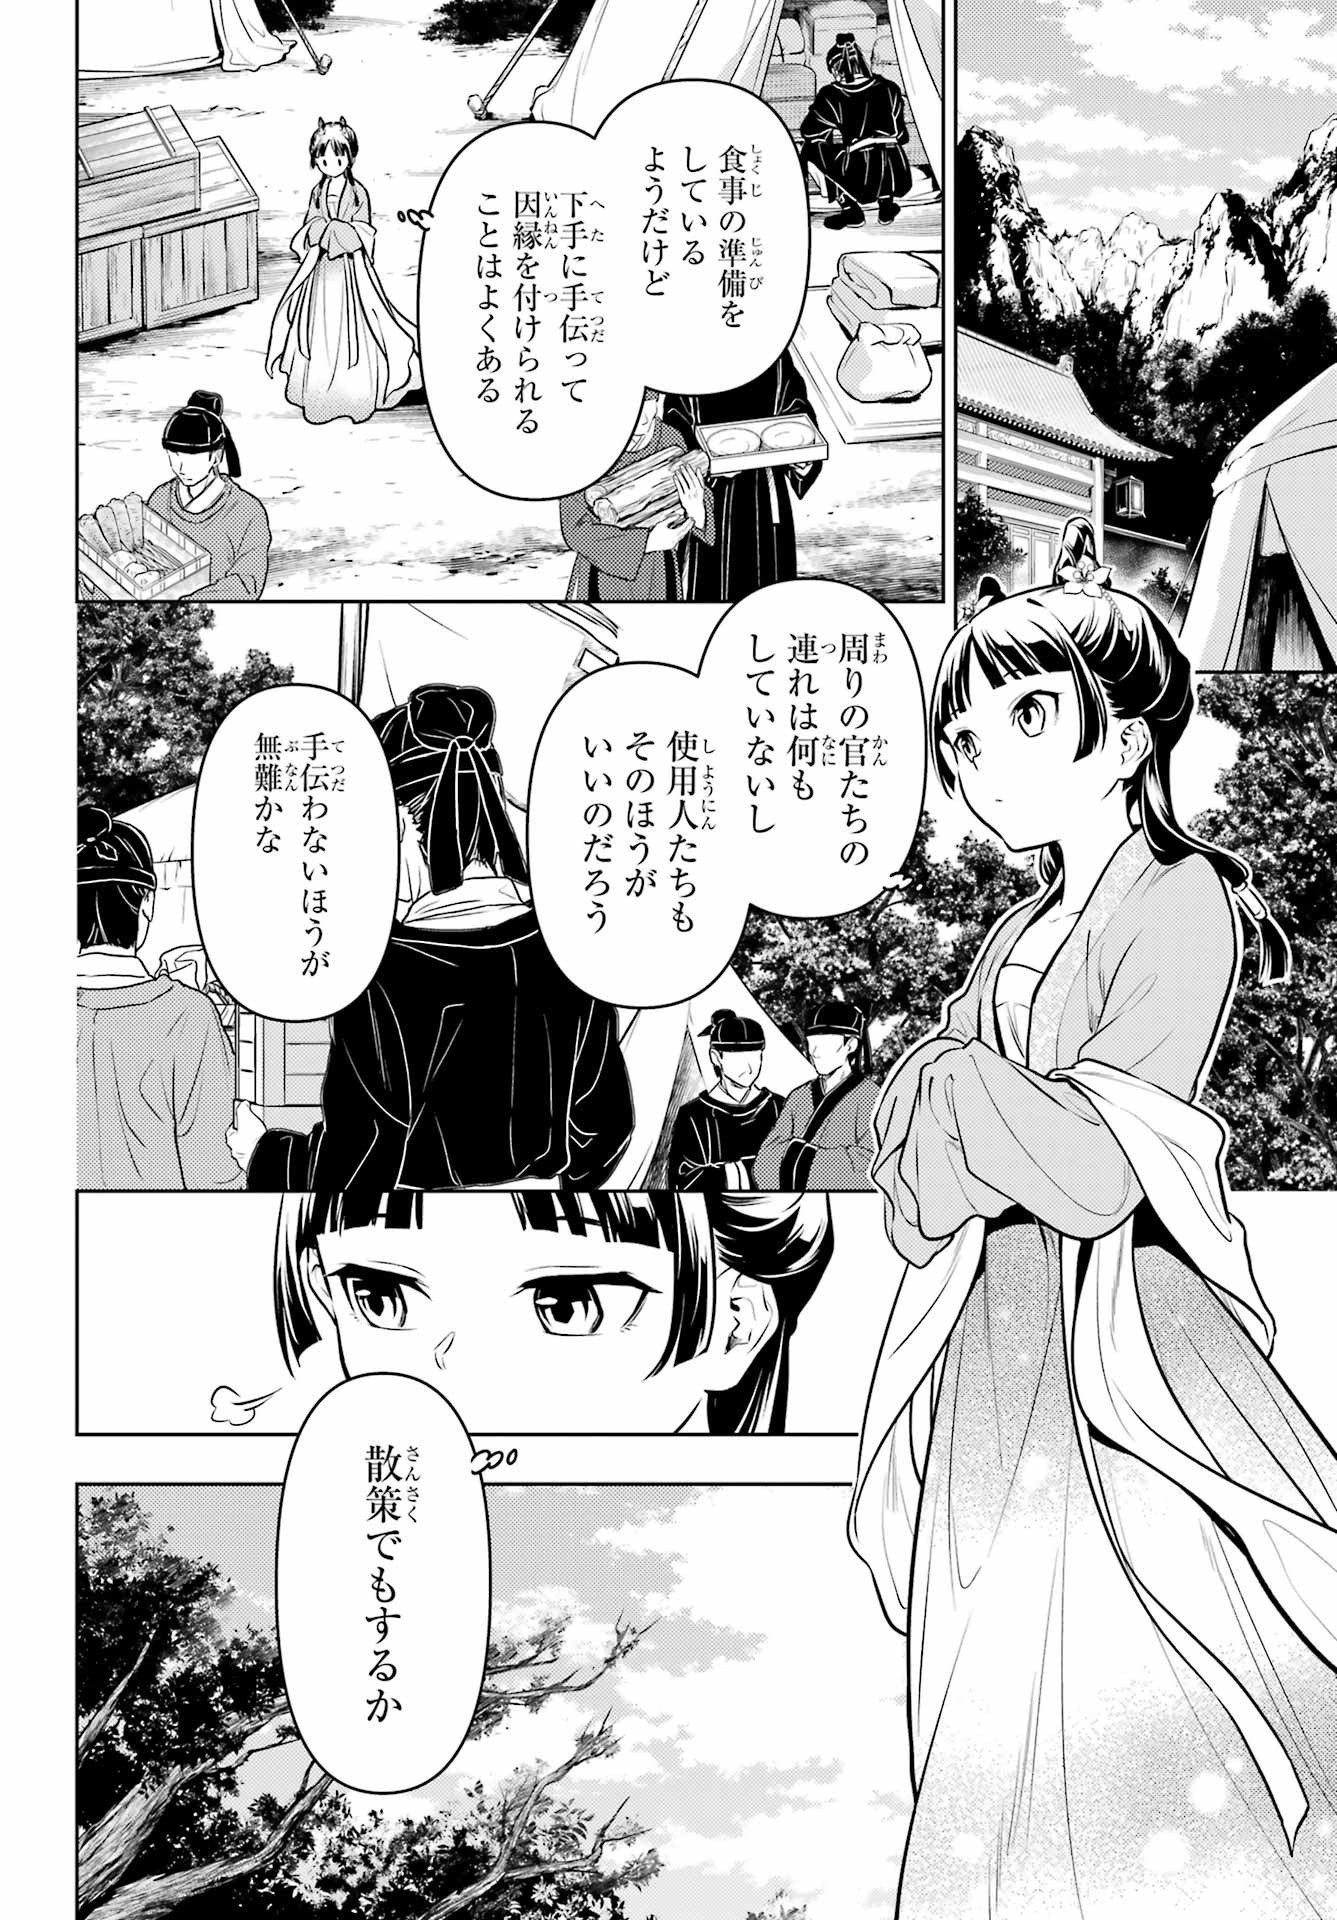 Kusuriya no Hitorigoto - Chapter 61 - Page 4